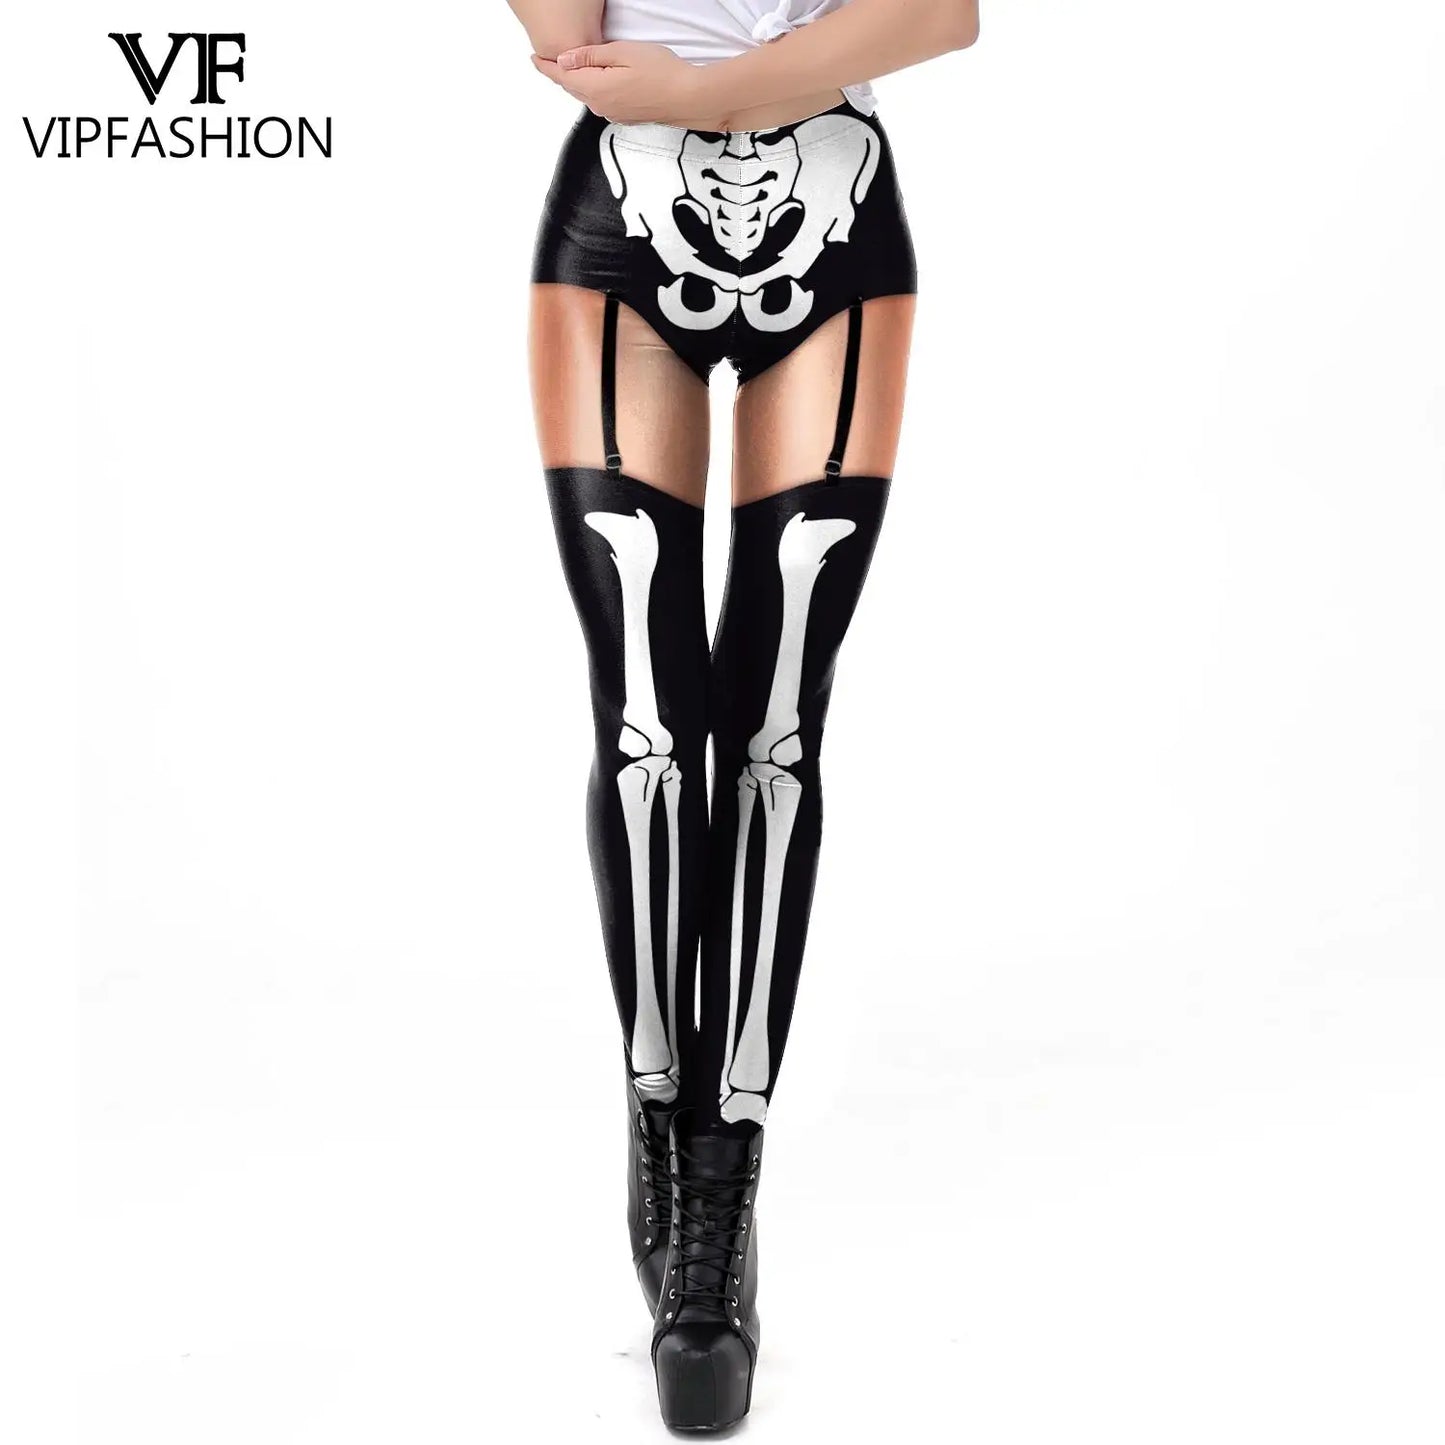 VIP FASHION Skeleton Women Leggings Cosplay Sexy Elastic Skinny Pants Holloween Costume 3D Printed Workout Fitness Leggings